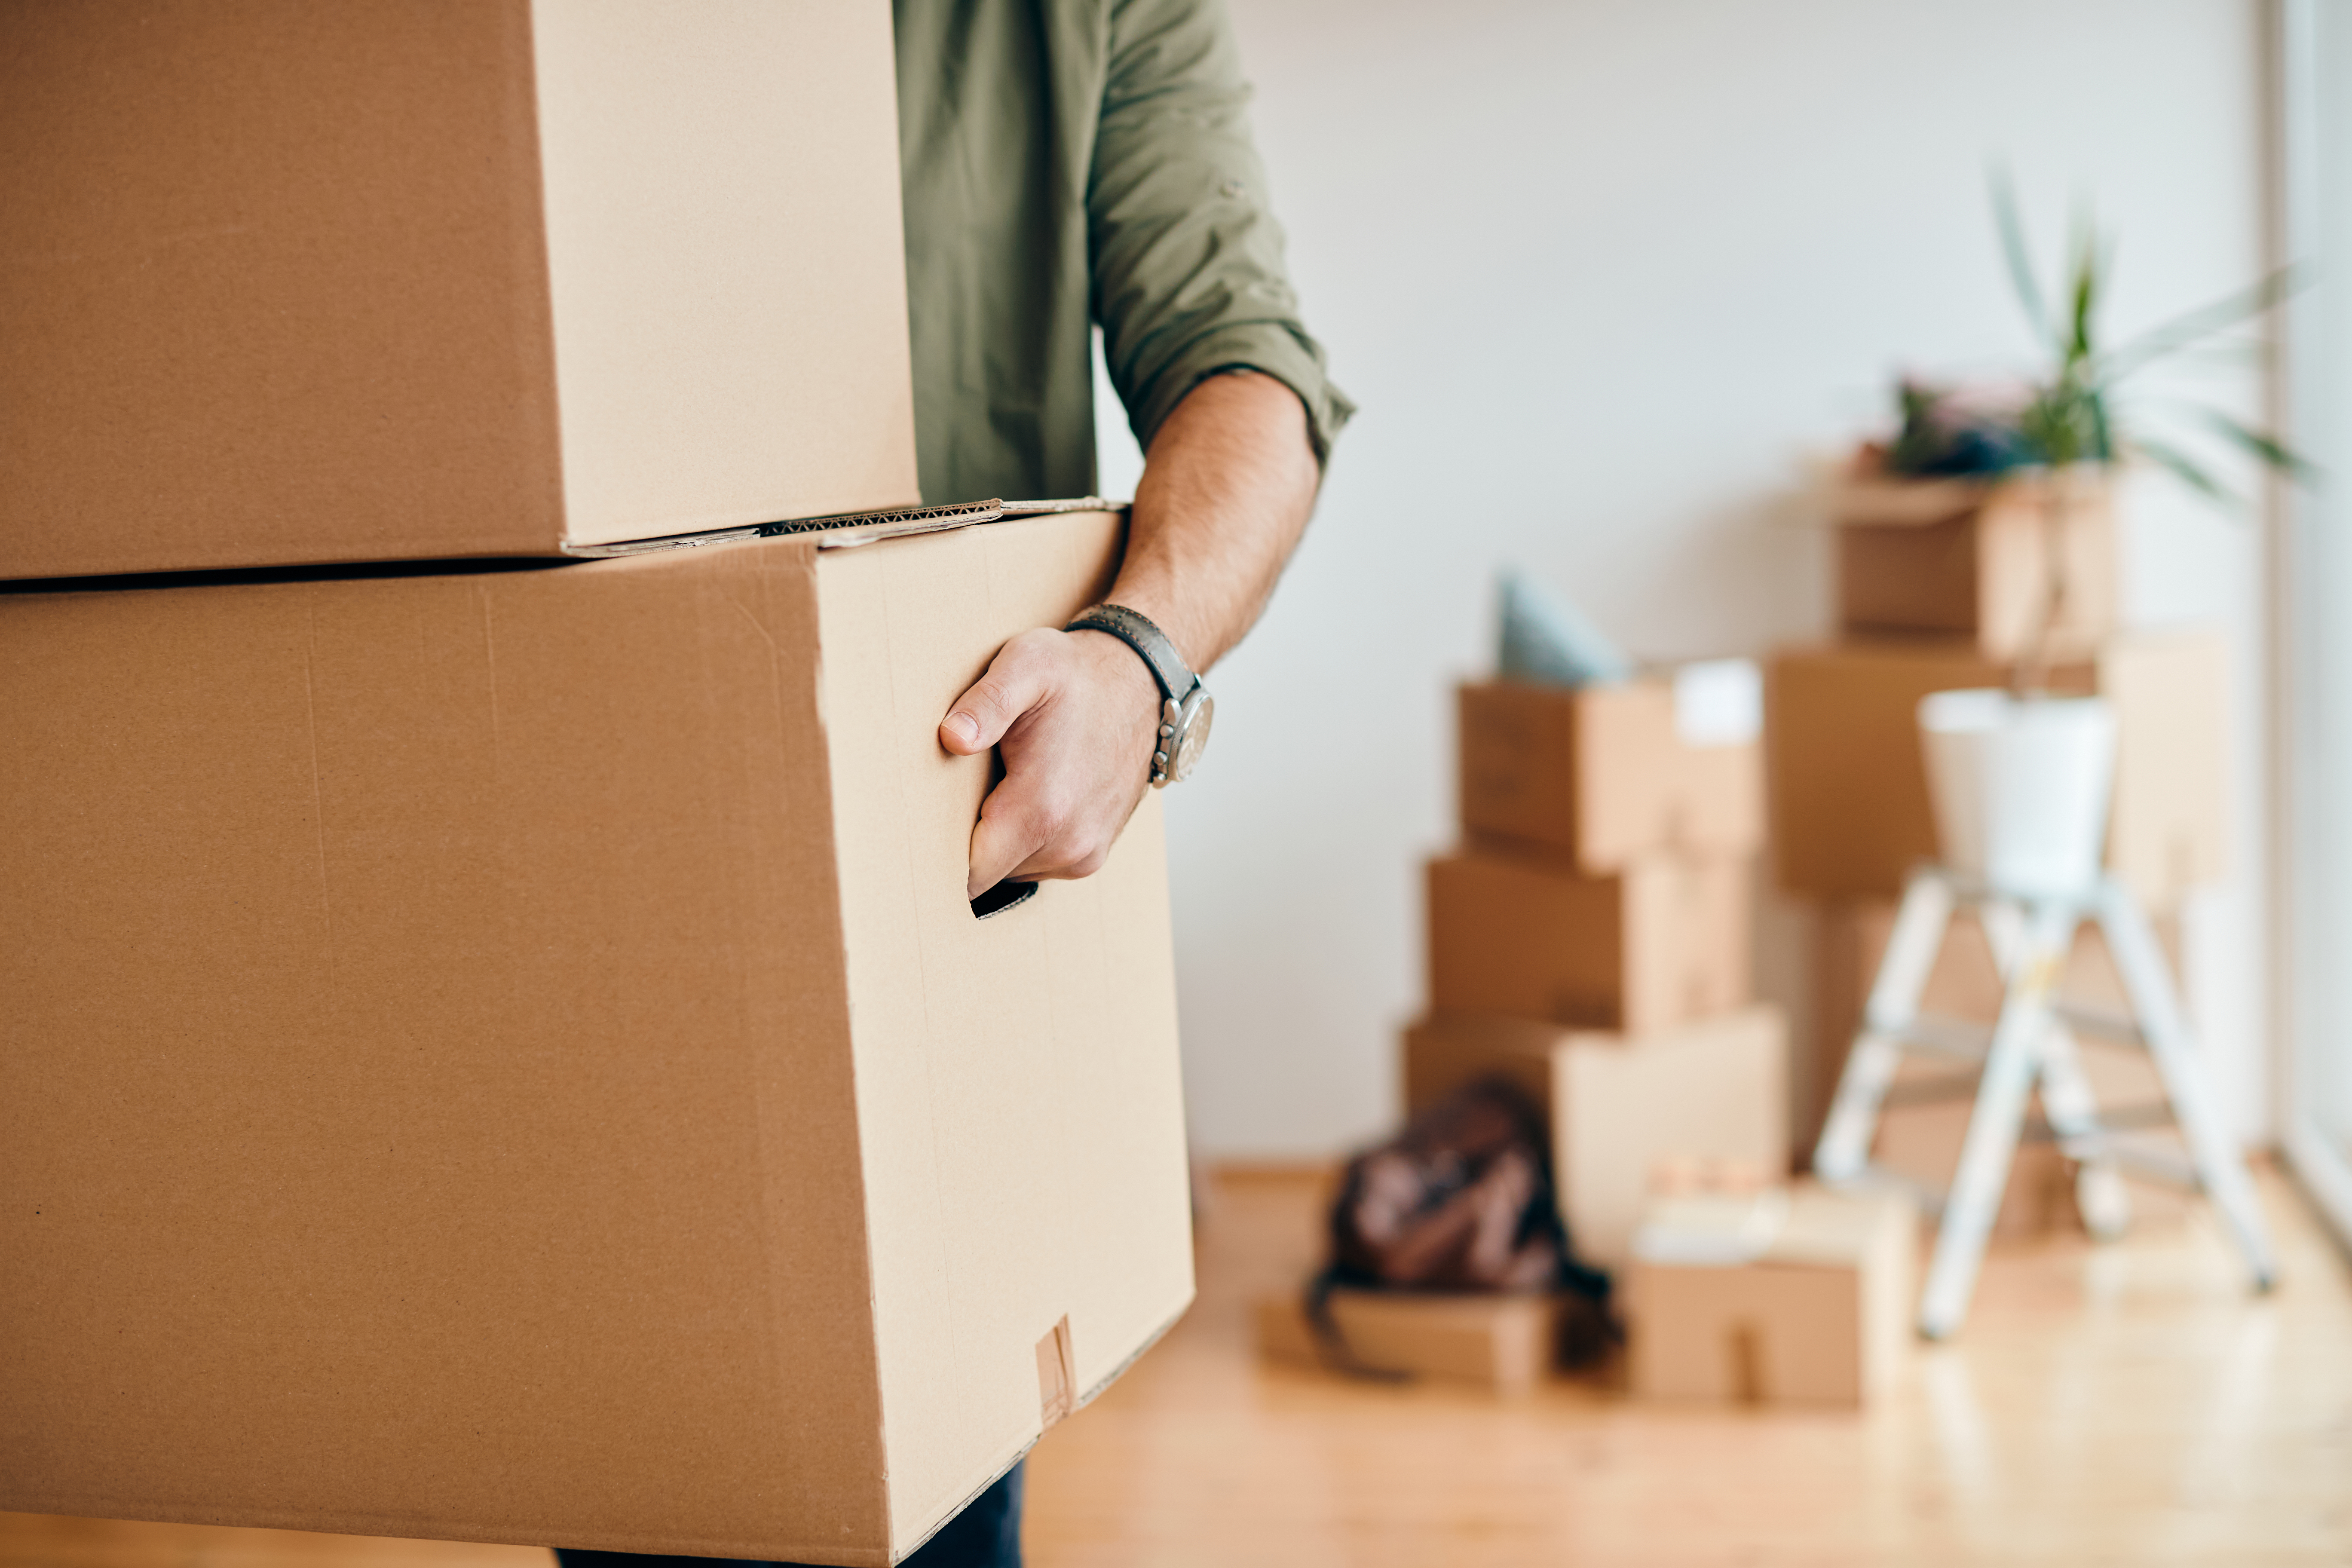 Un homme en train d'emballer des cartons de déménagement | Source : Shutterstock